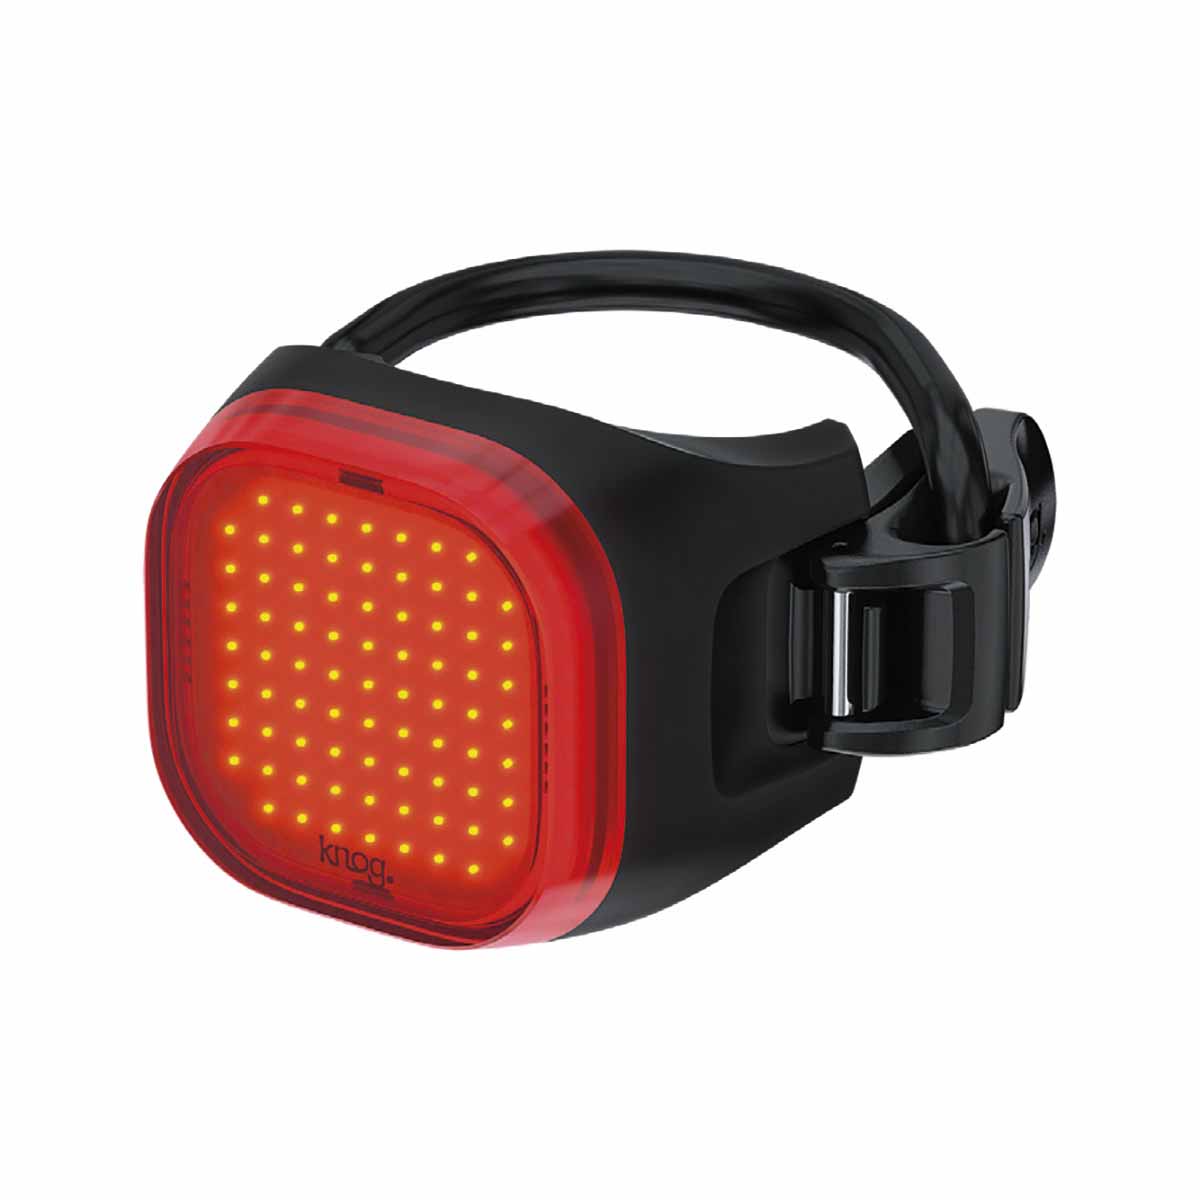 Knog mini Blinder LED rear light